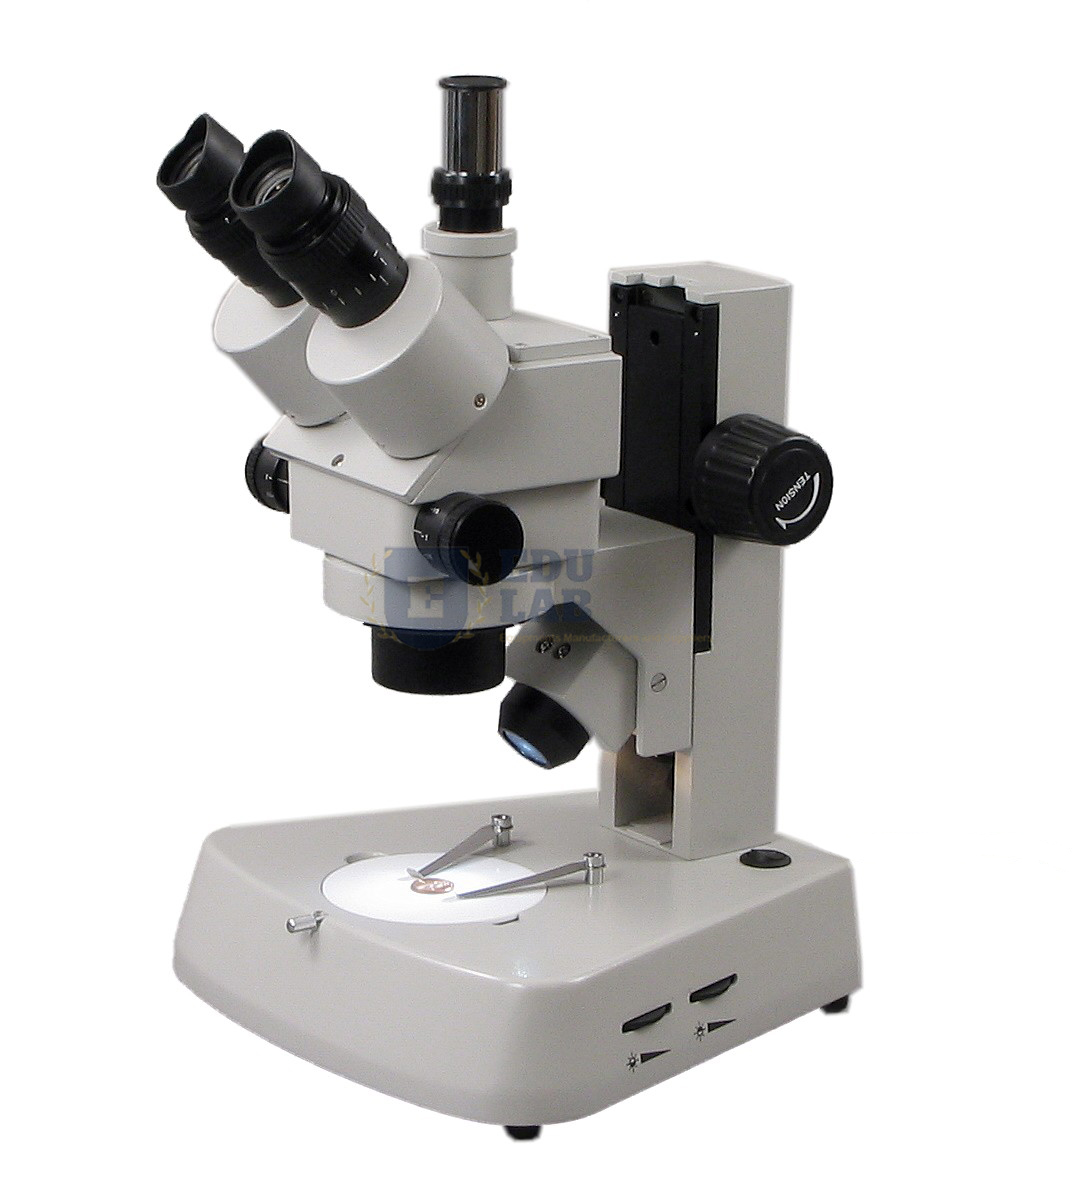 Dual Power Trinocular Stereo Microscope